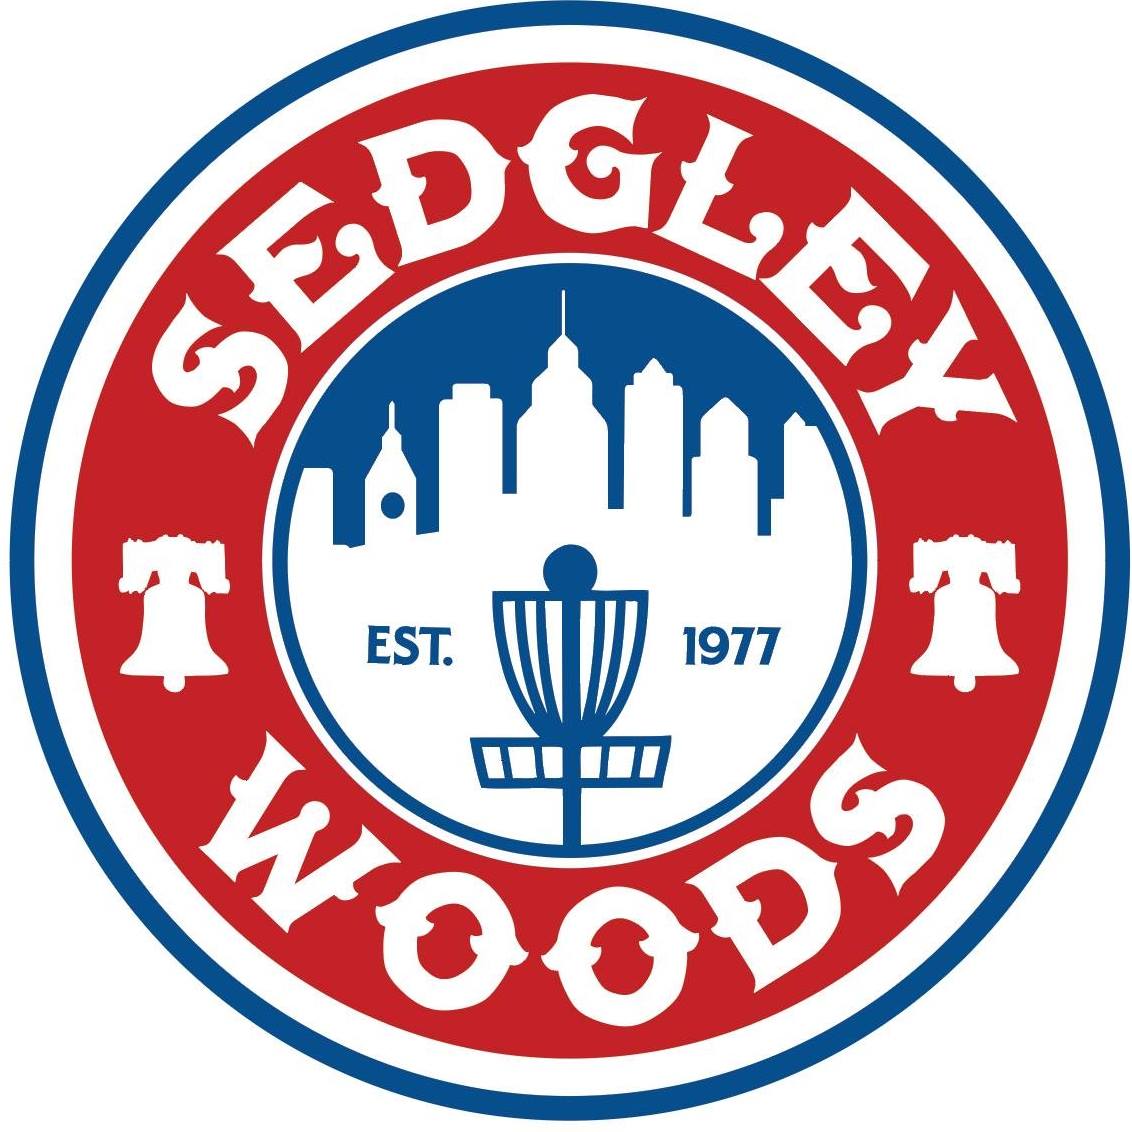 Sedgley Woods